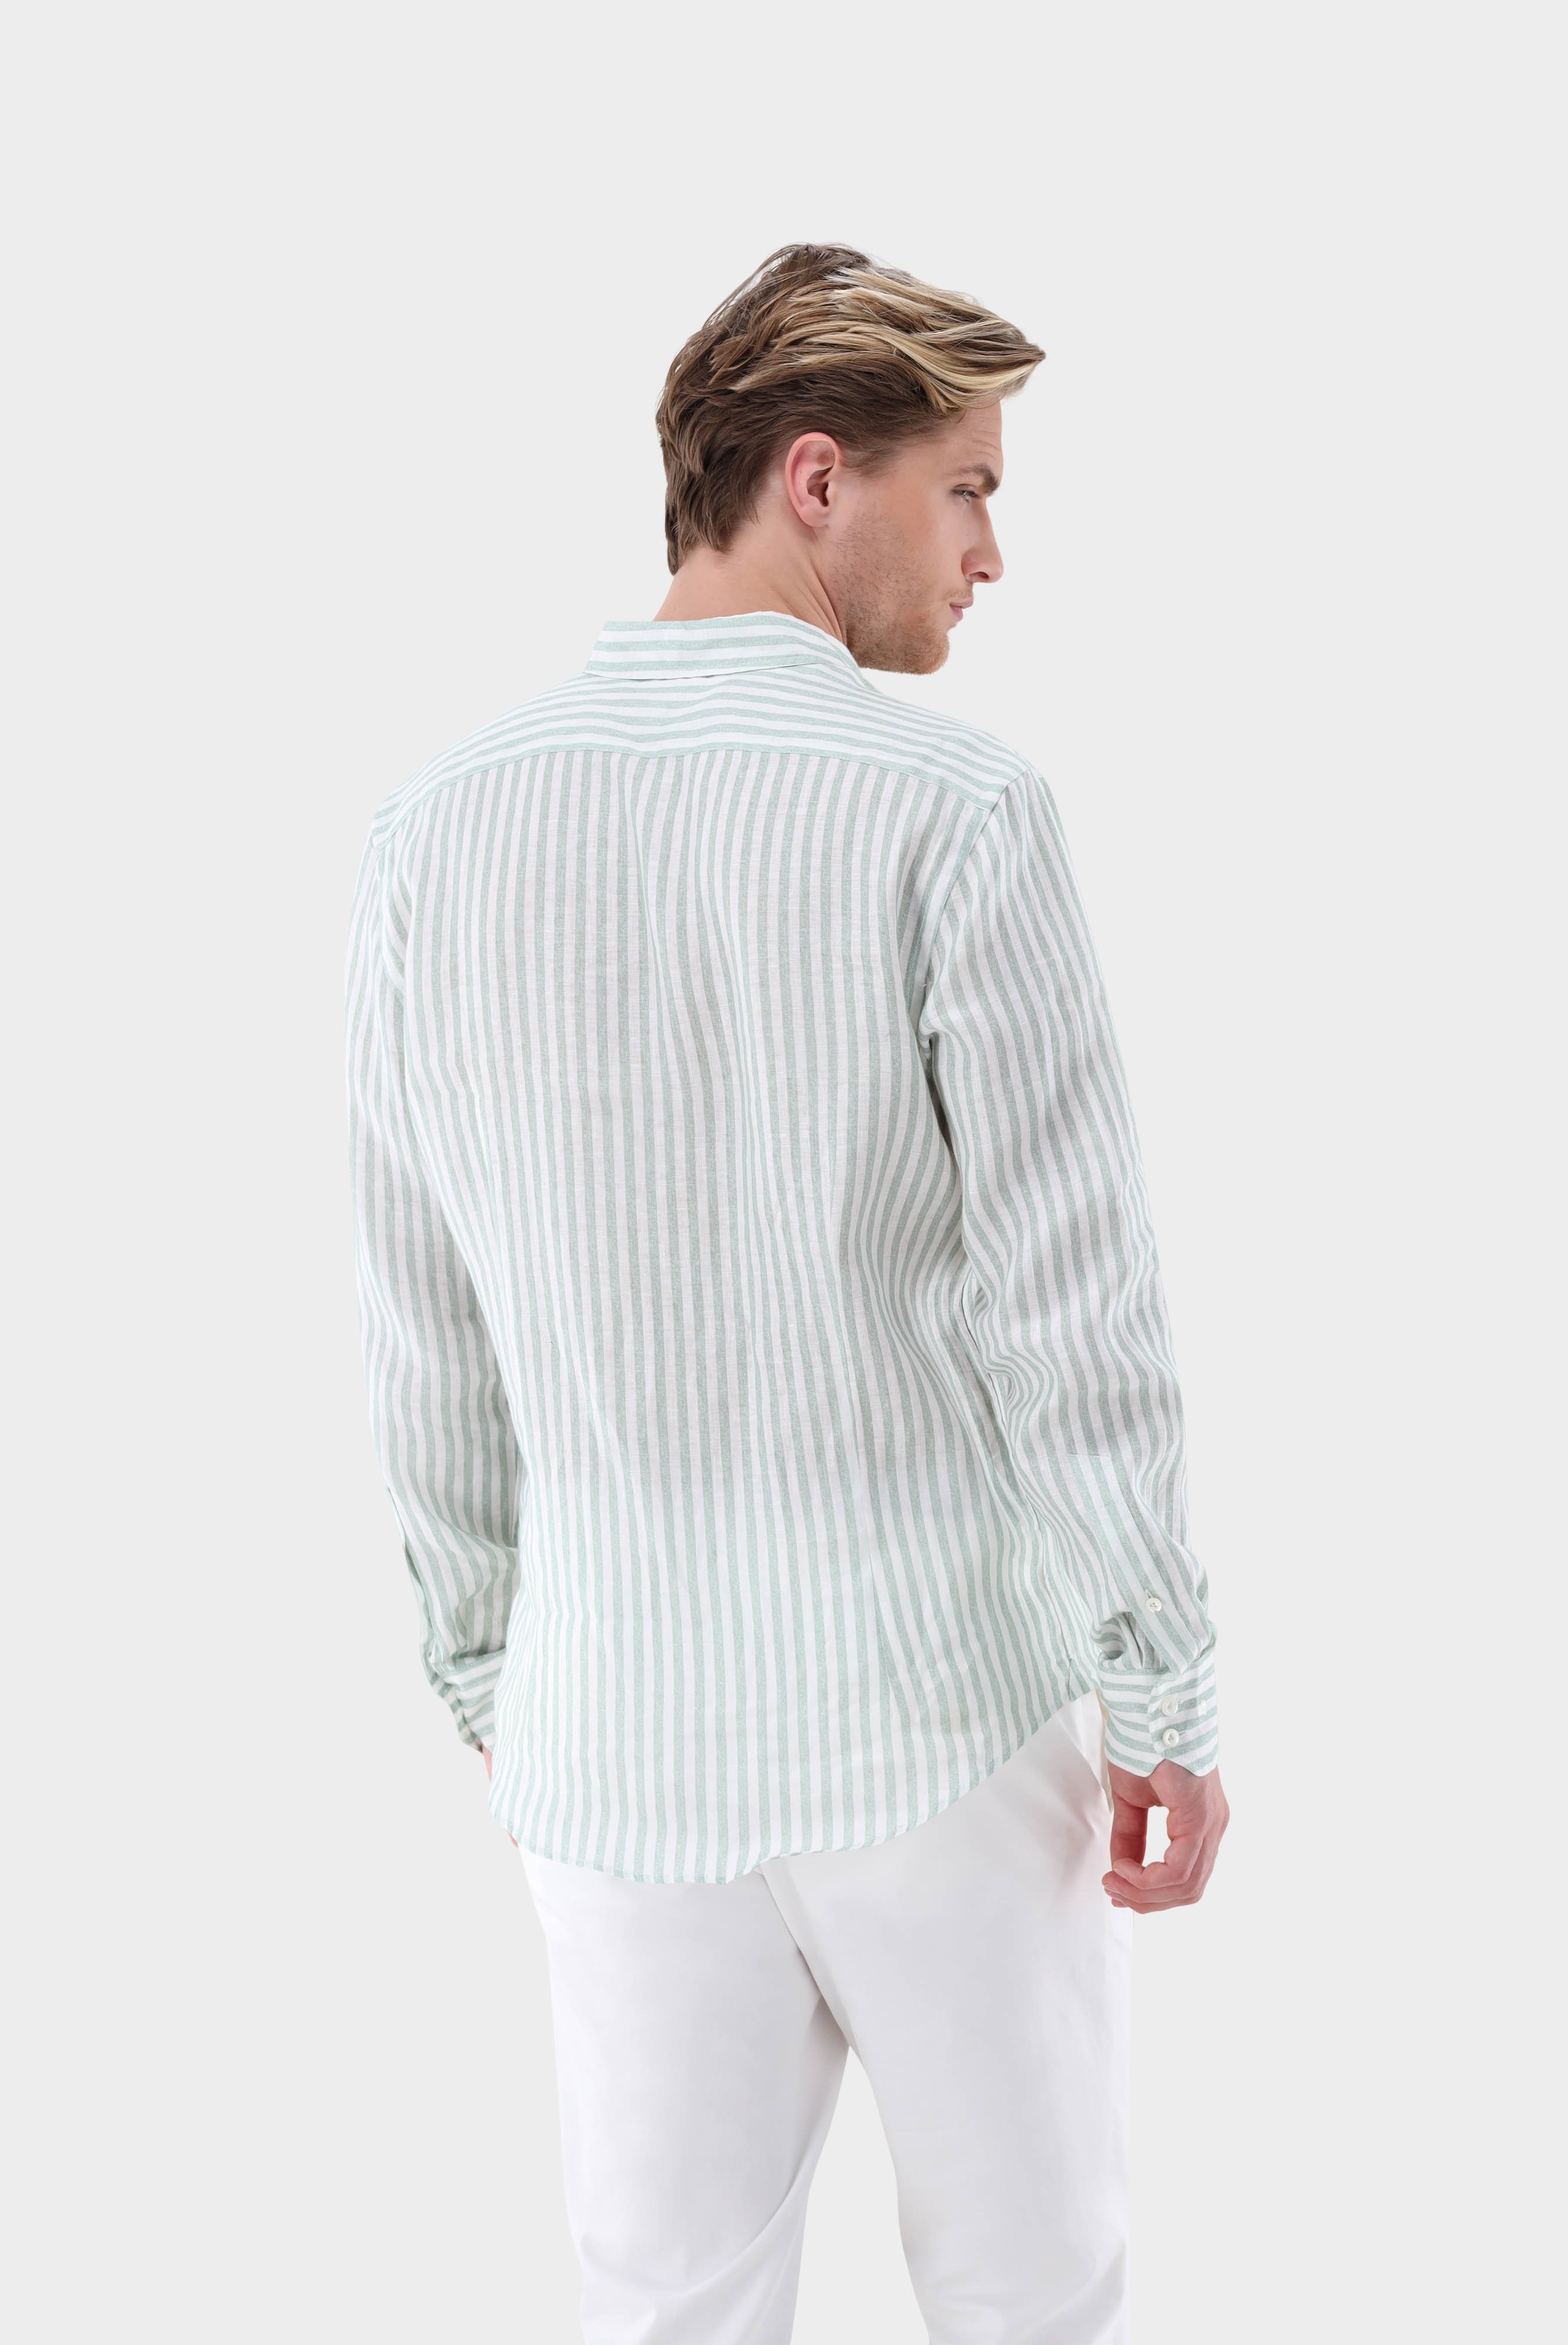 Casual Shirts+Linen Stripe Print Shirt Tailor Fit+20.2013.9V.170352.940.39